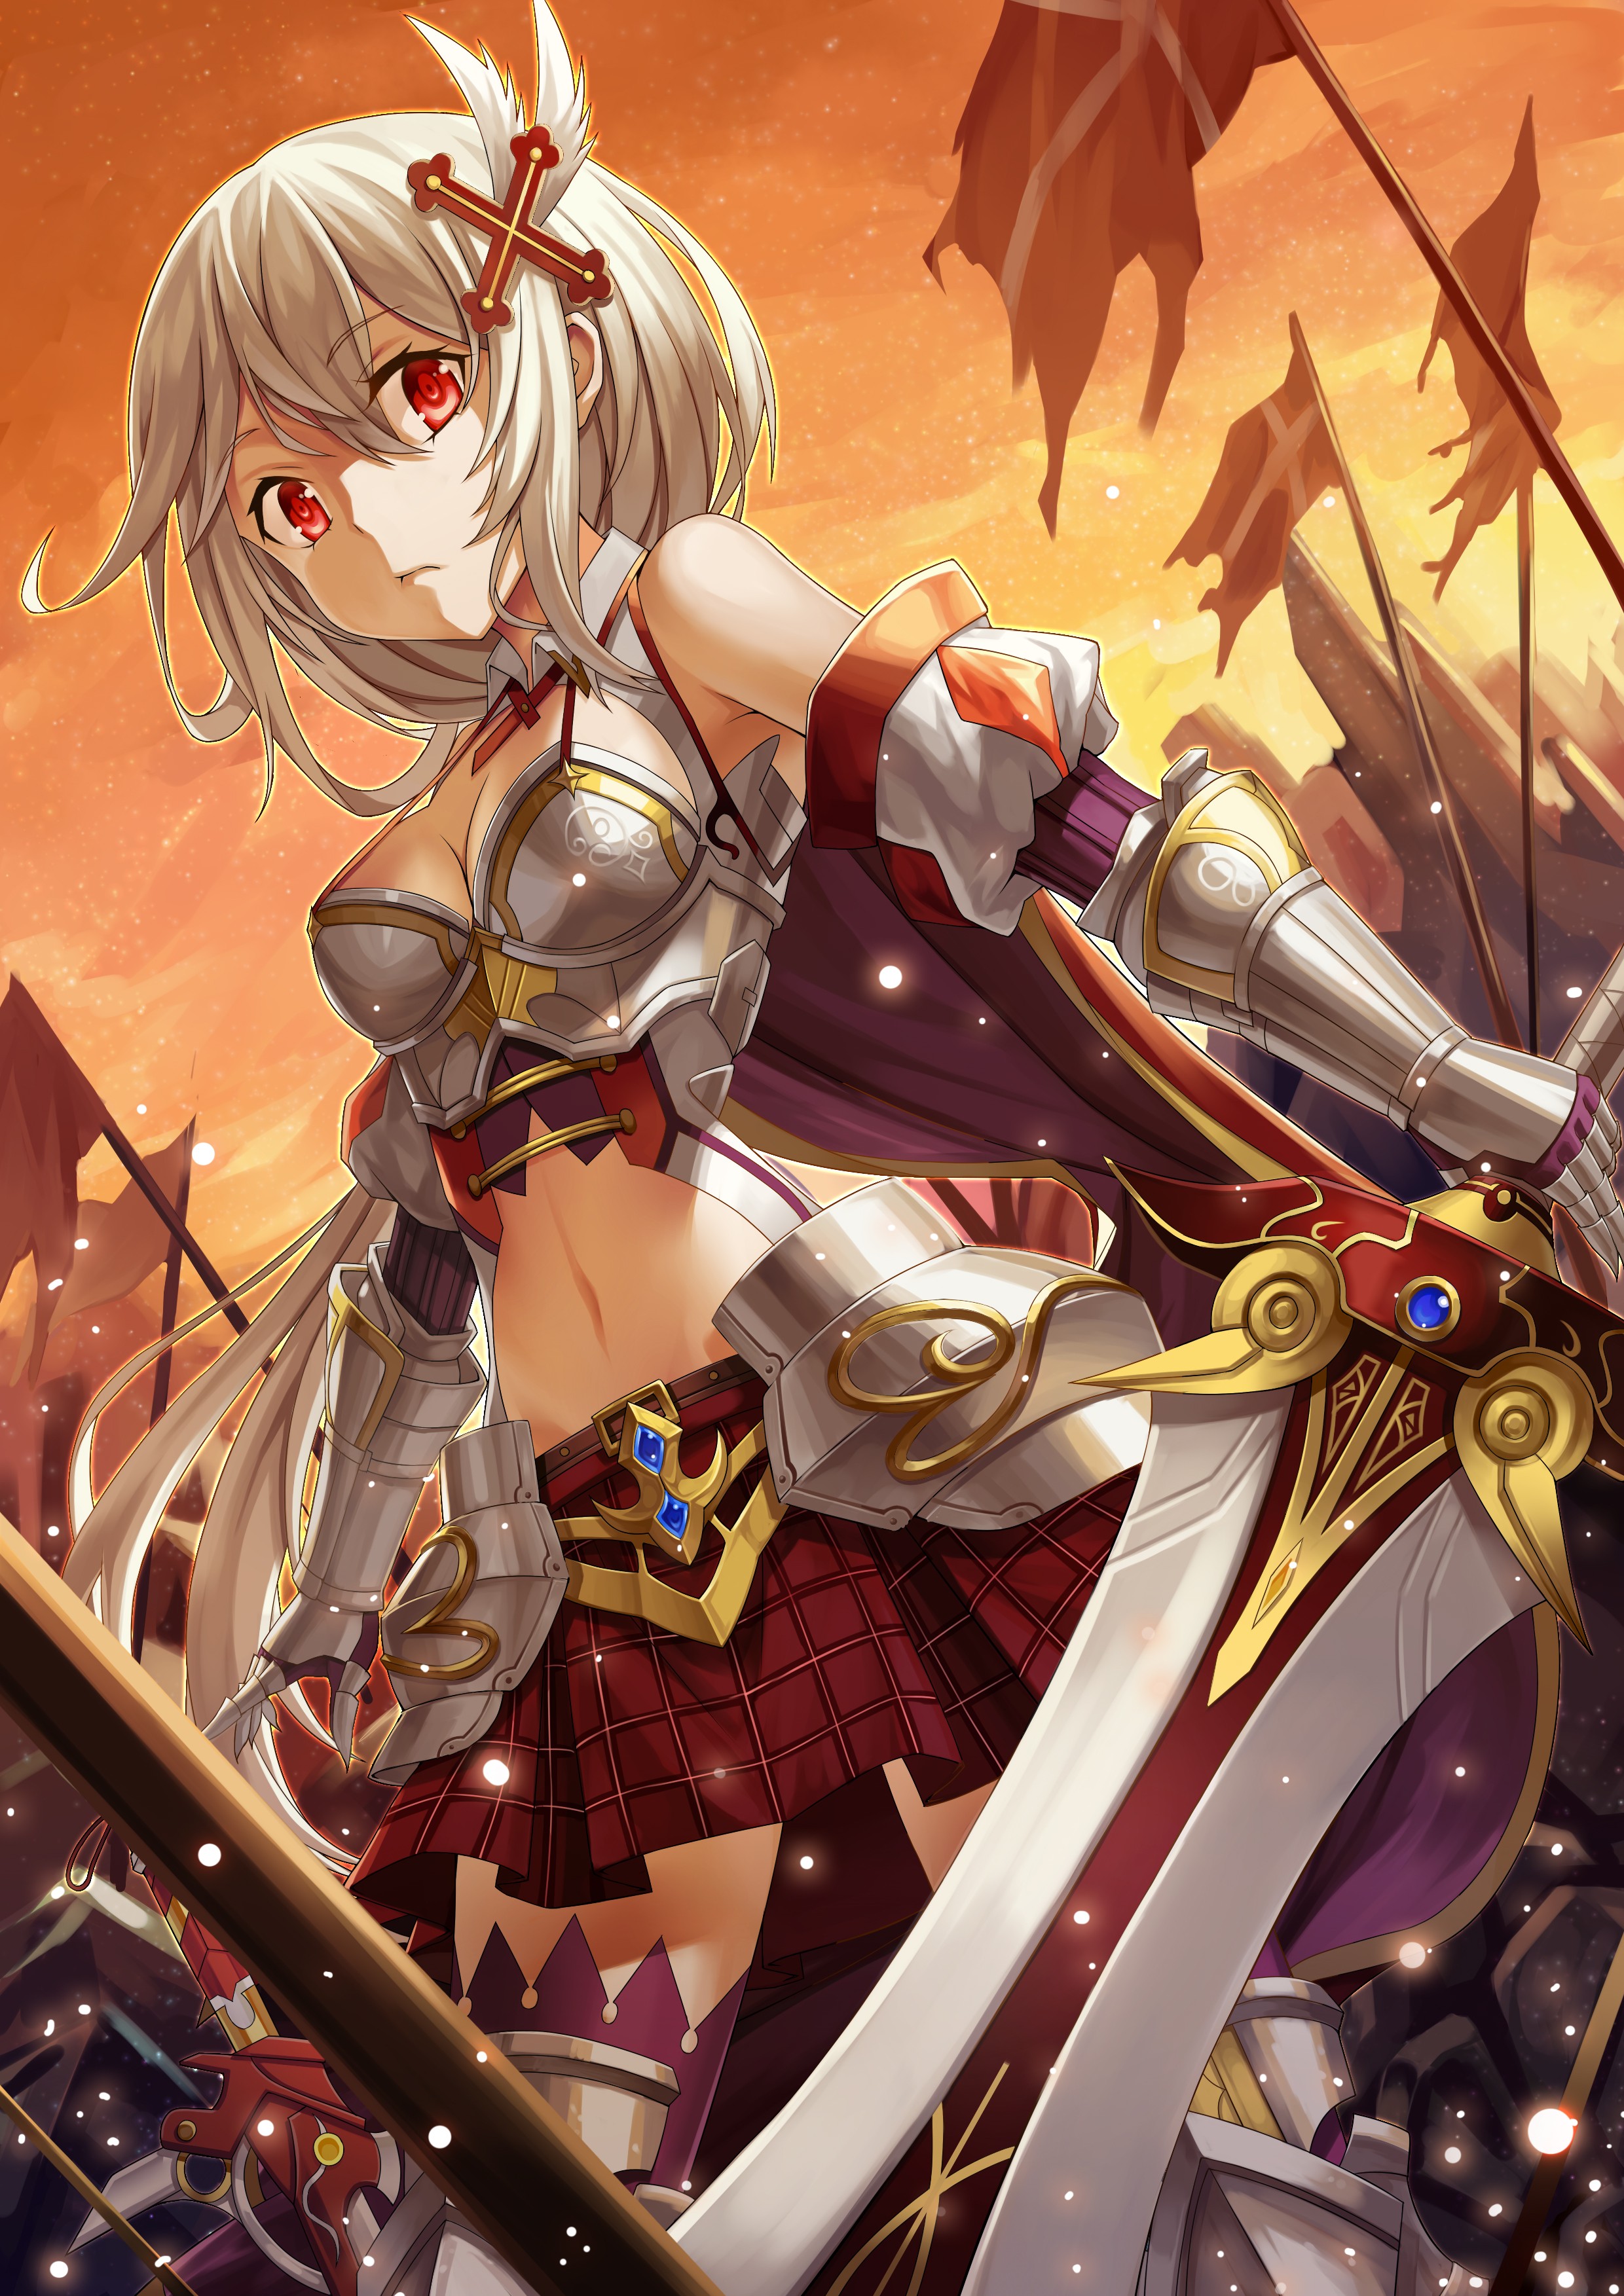 Anime 2480x3507 anime anime girls armor cleavage sword original characters Pixiv red eyes fantasy art fantasy girl fantasy armor